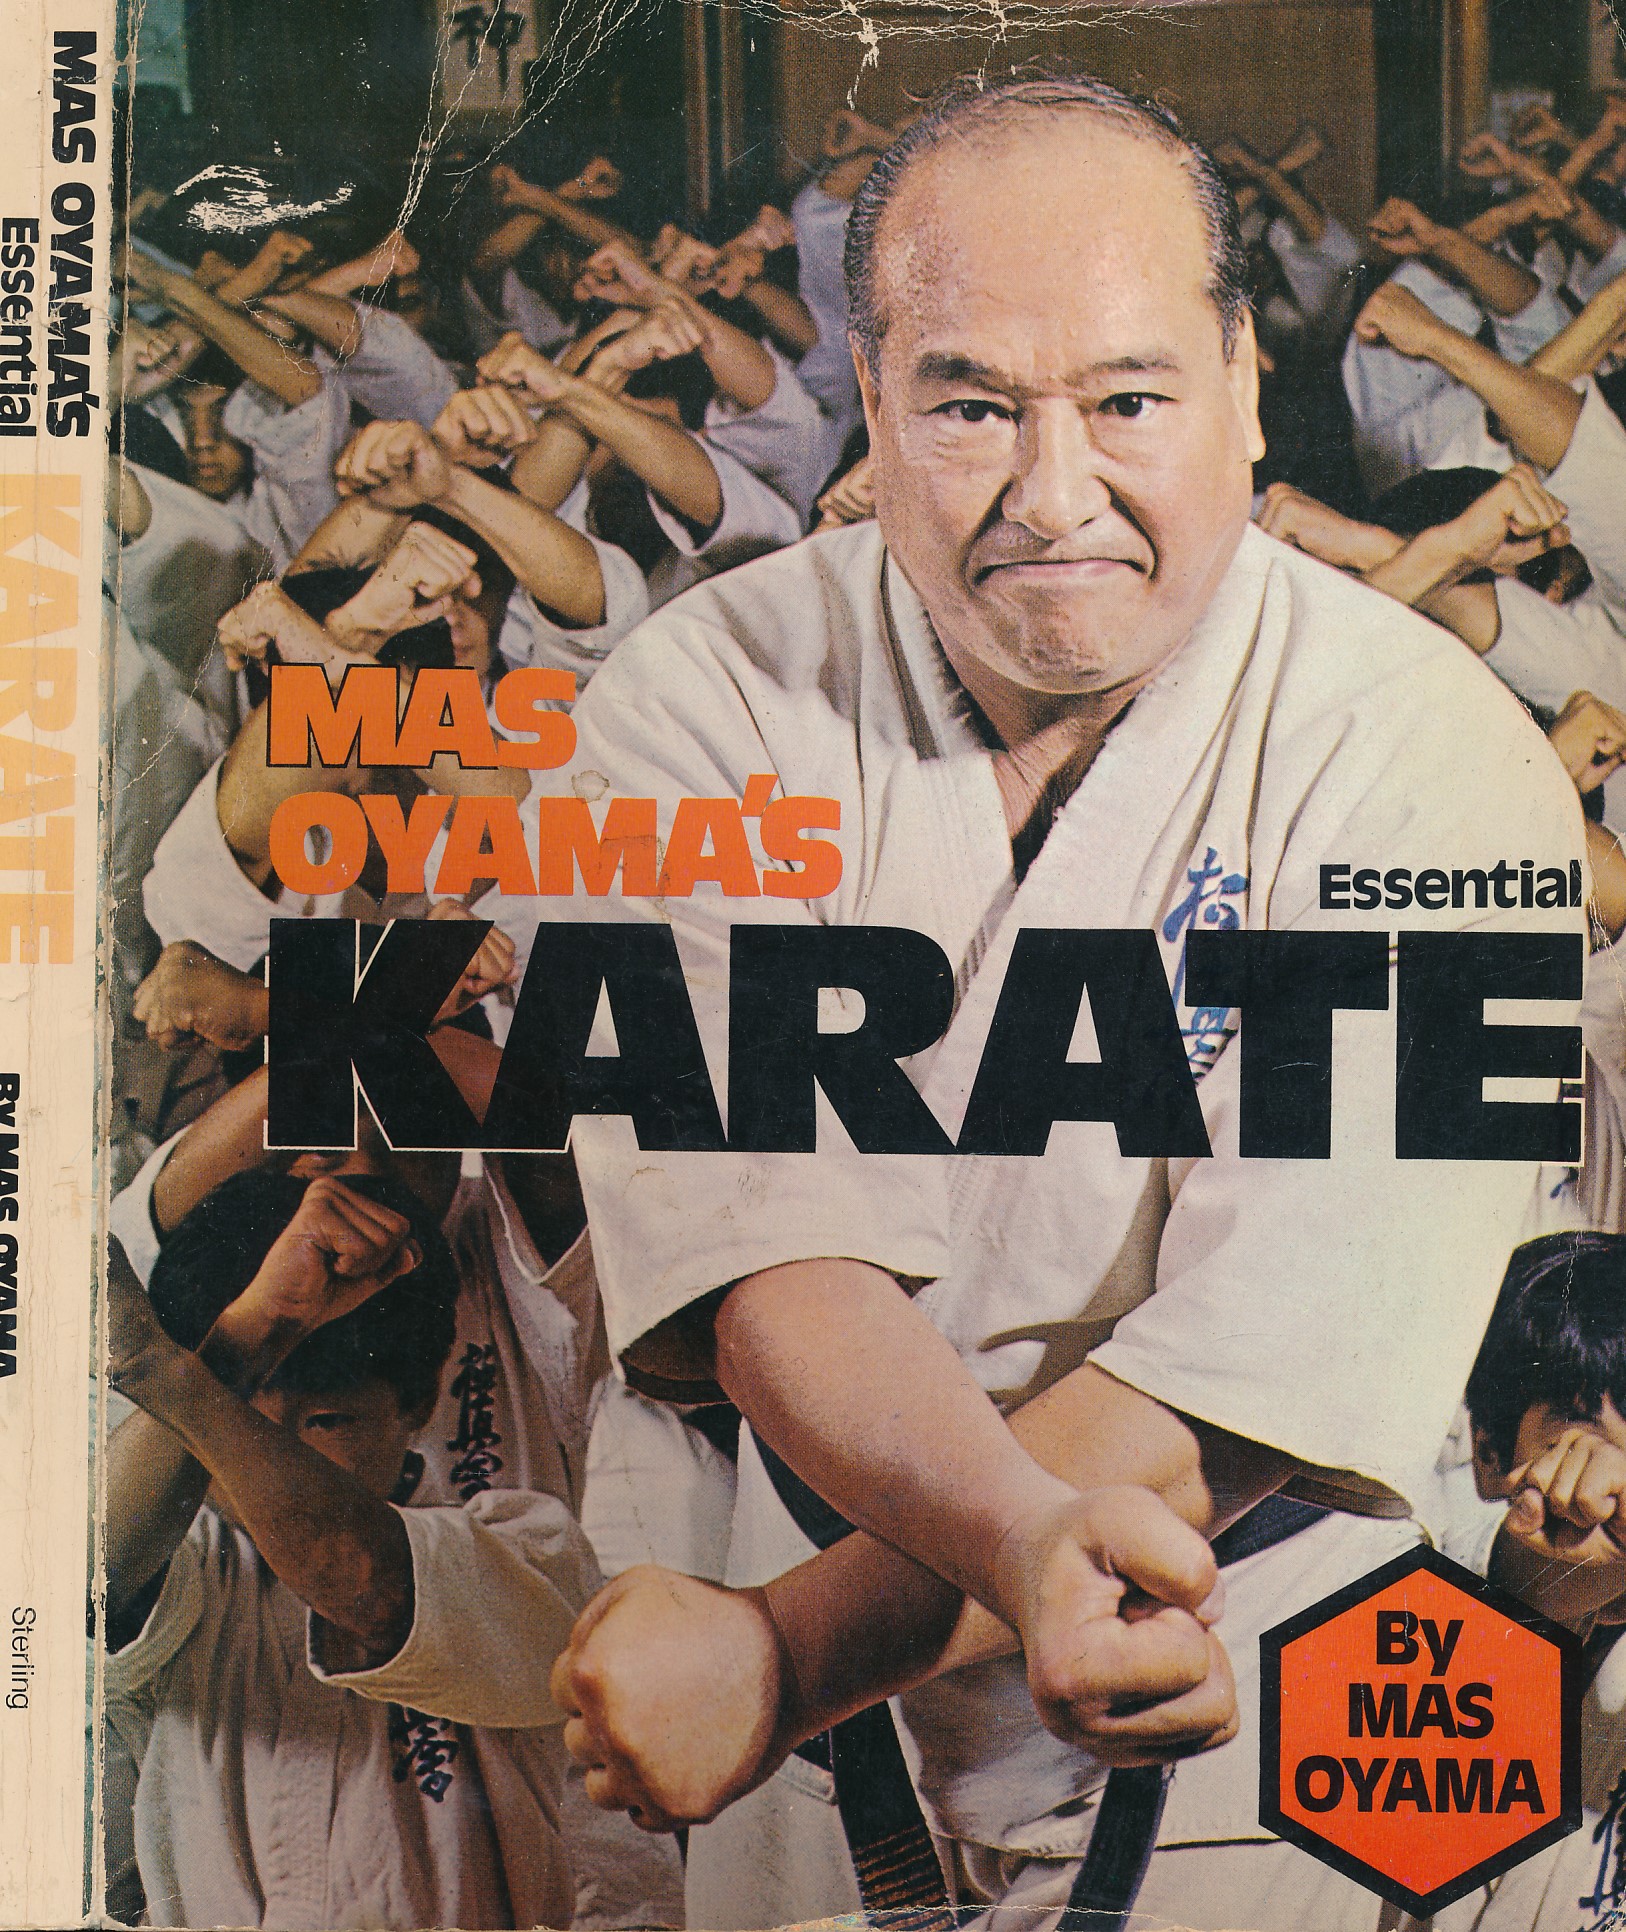 Mas Oyama's Essential Karate